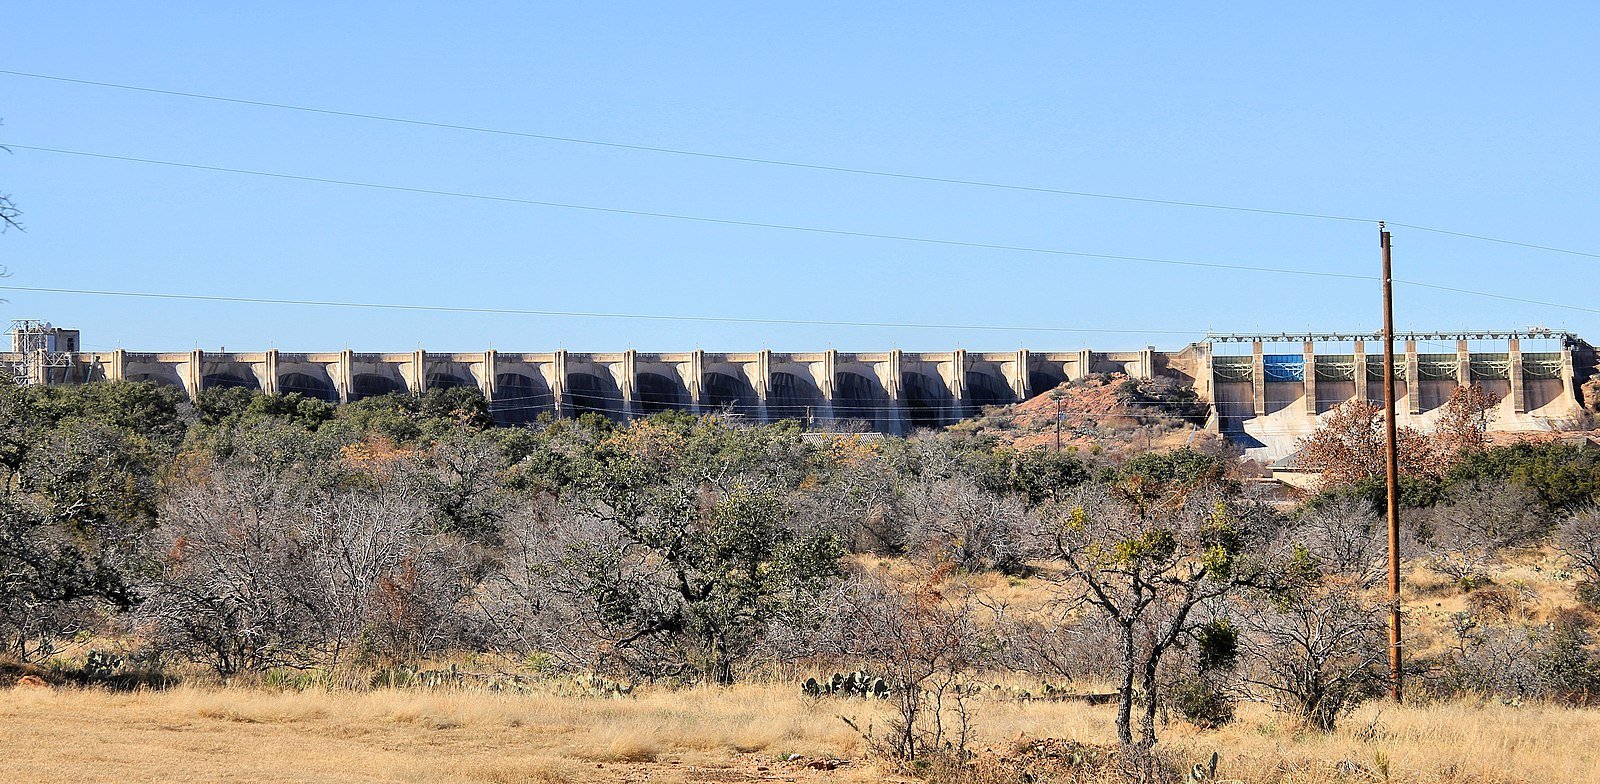 Buchanan Dam was completed in 1938